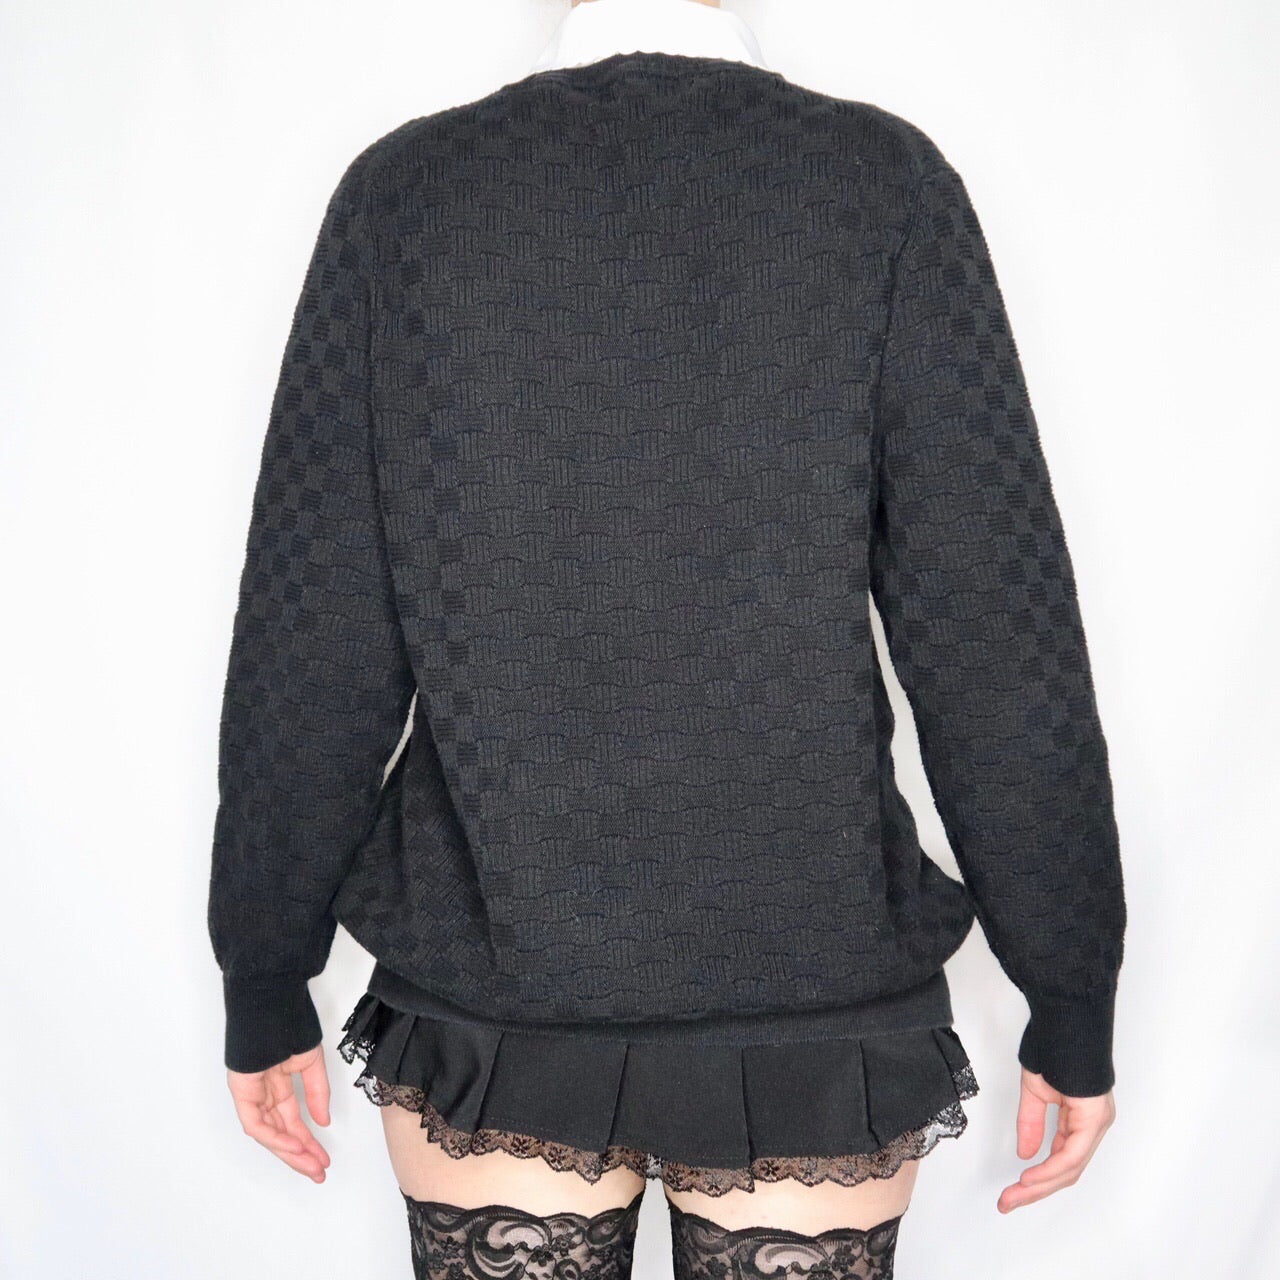 Karl Lagerfeld Paris Black Knit Sweater